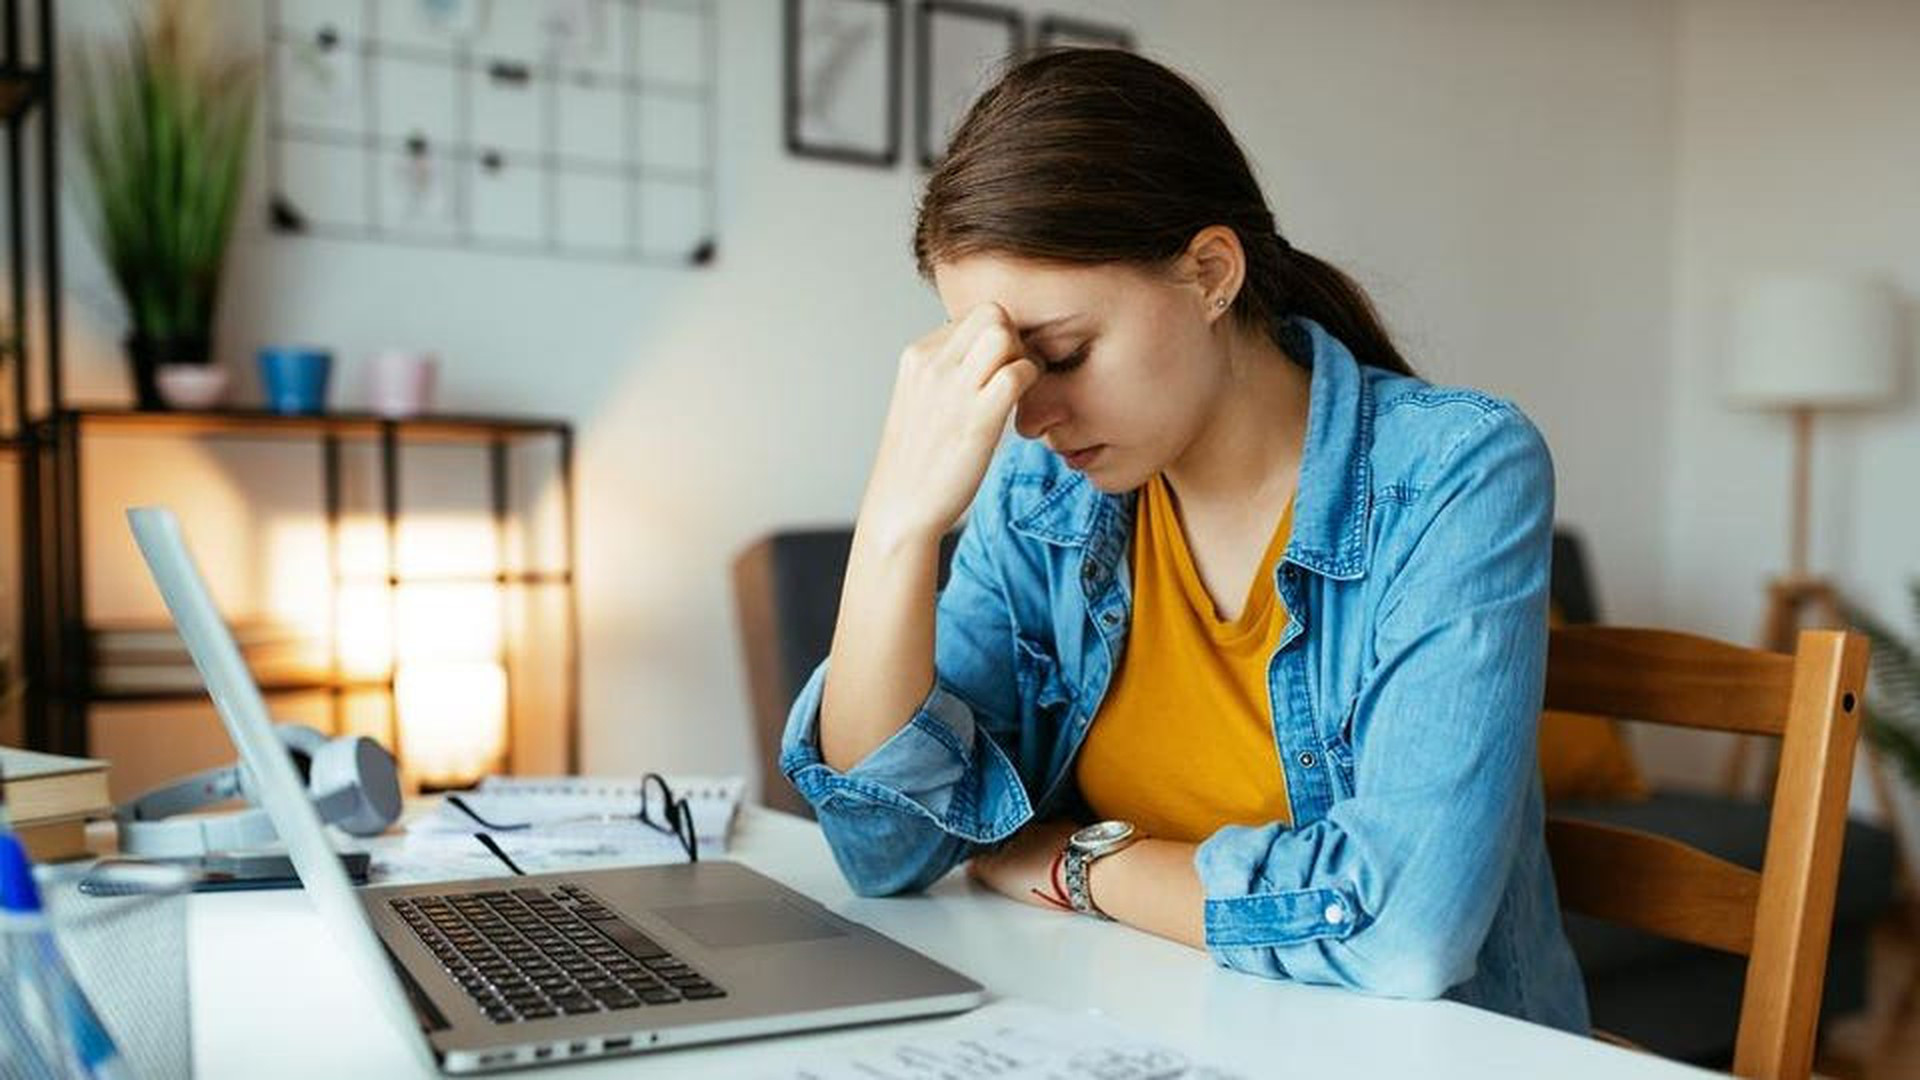 6 Creative Ways To Beat Job Search Burnout